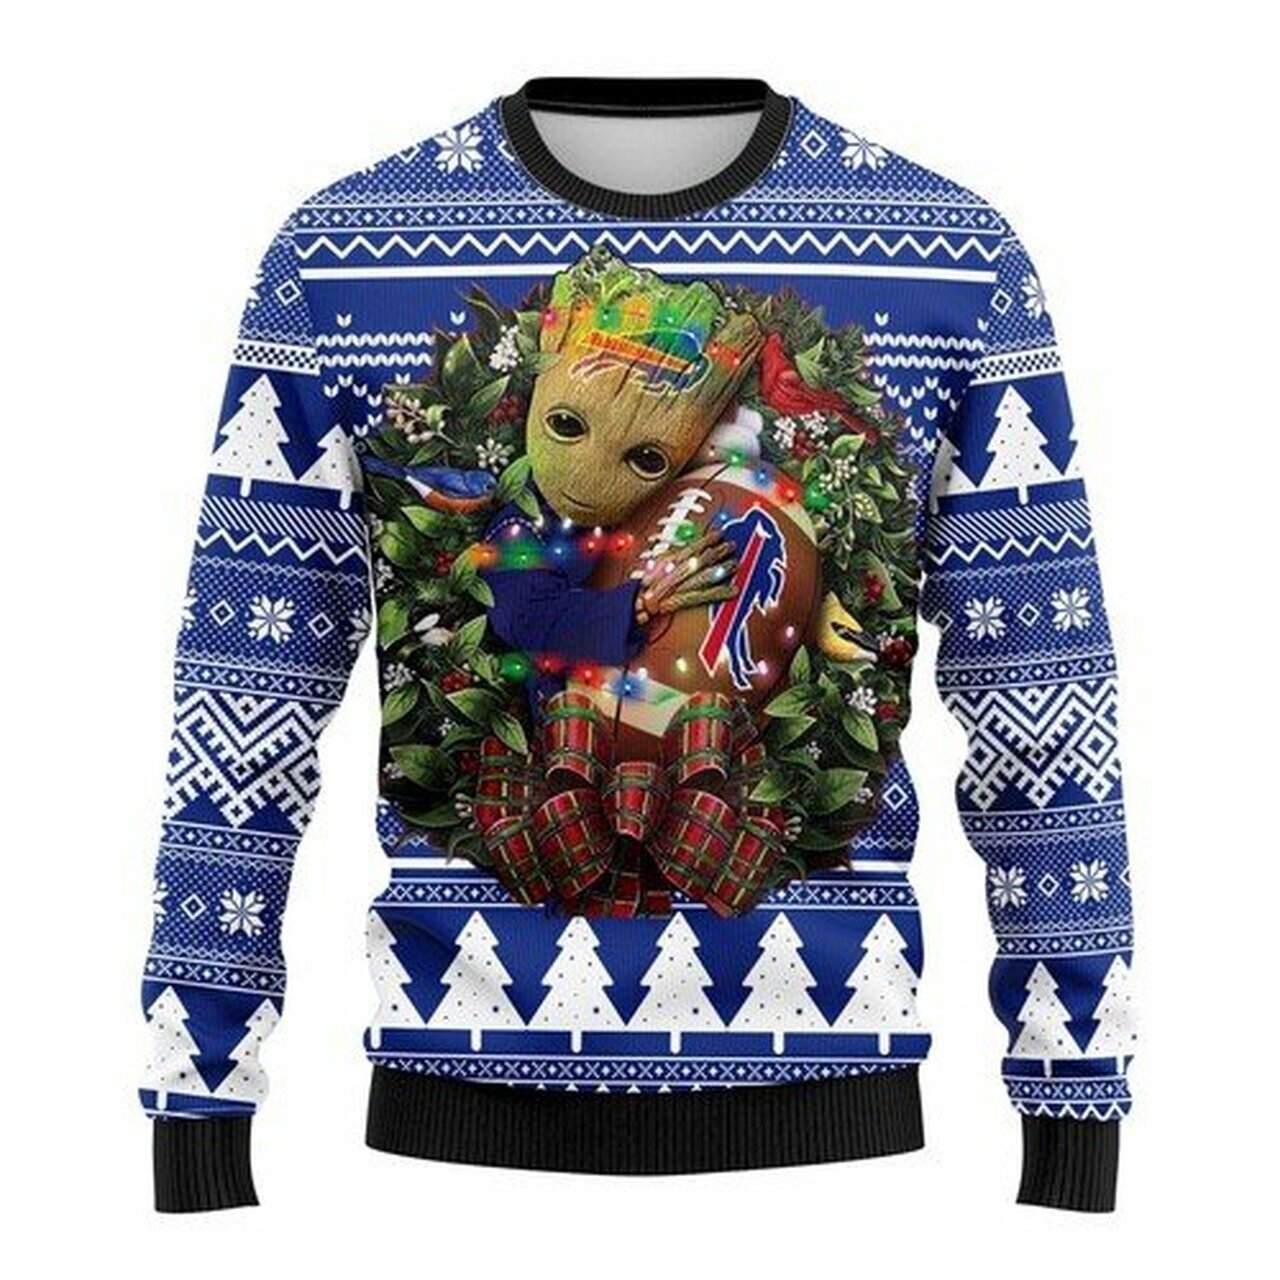 NFL Buffalo Bills Groot hug ugly christmas sweater